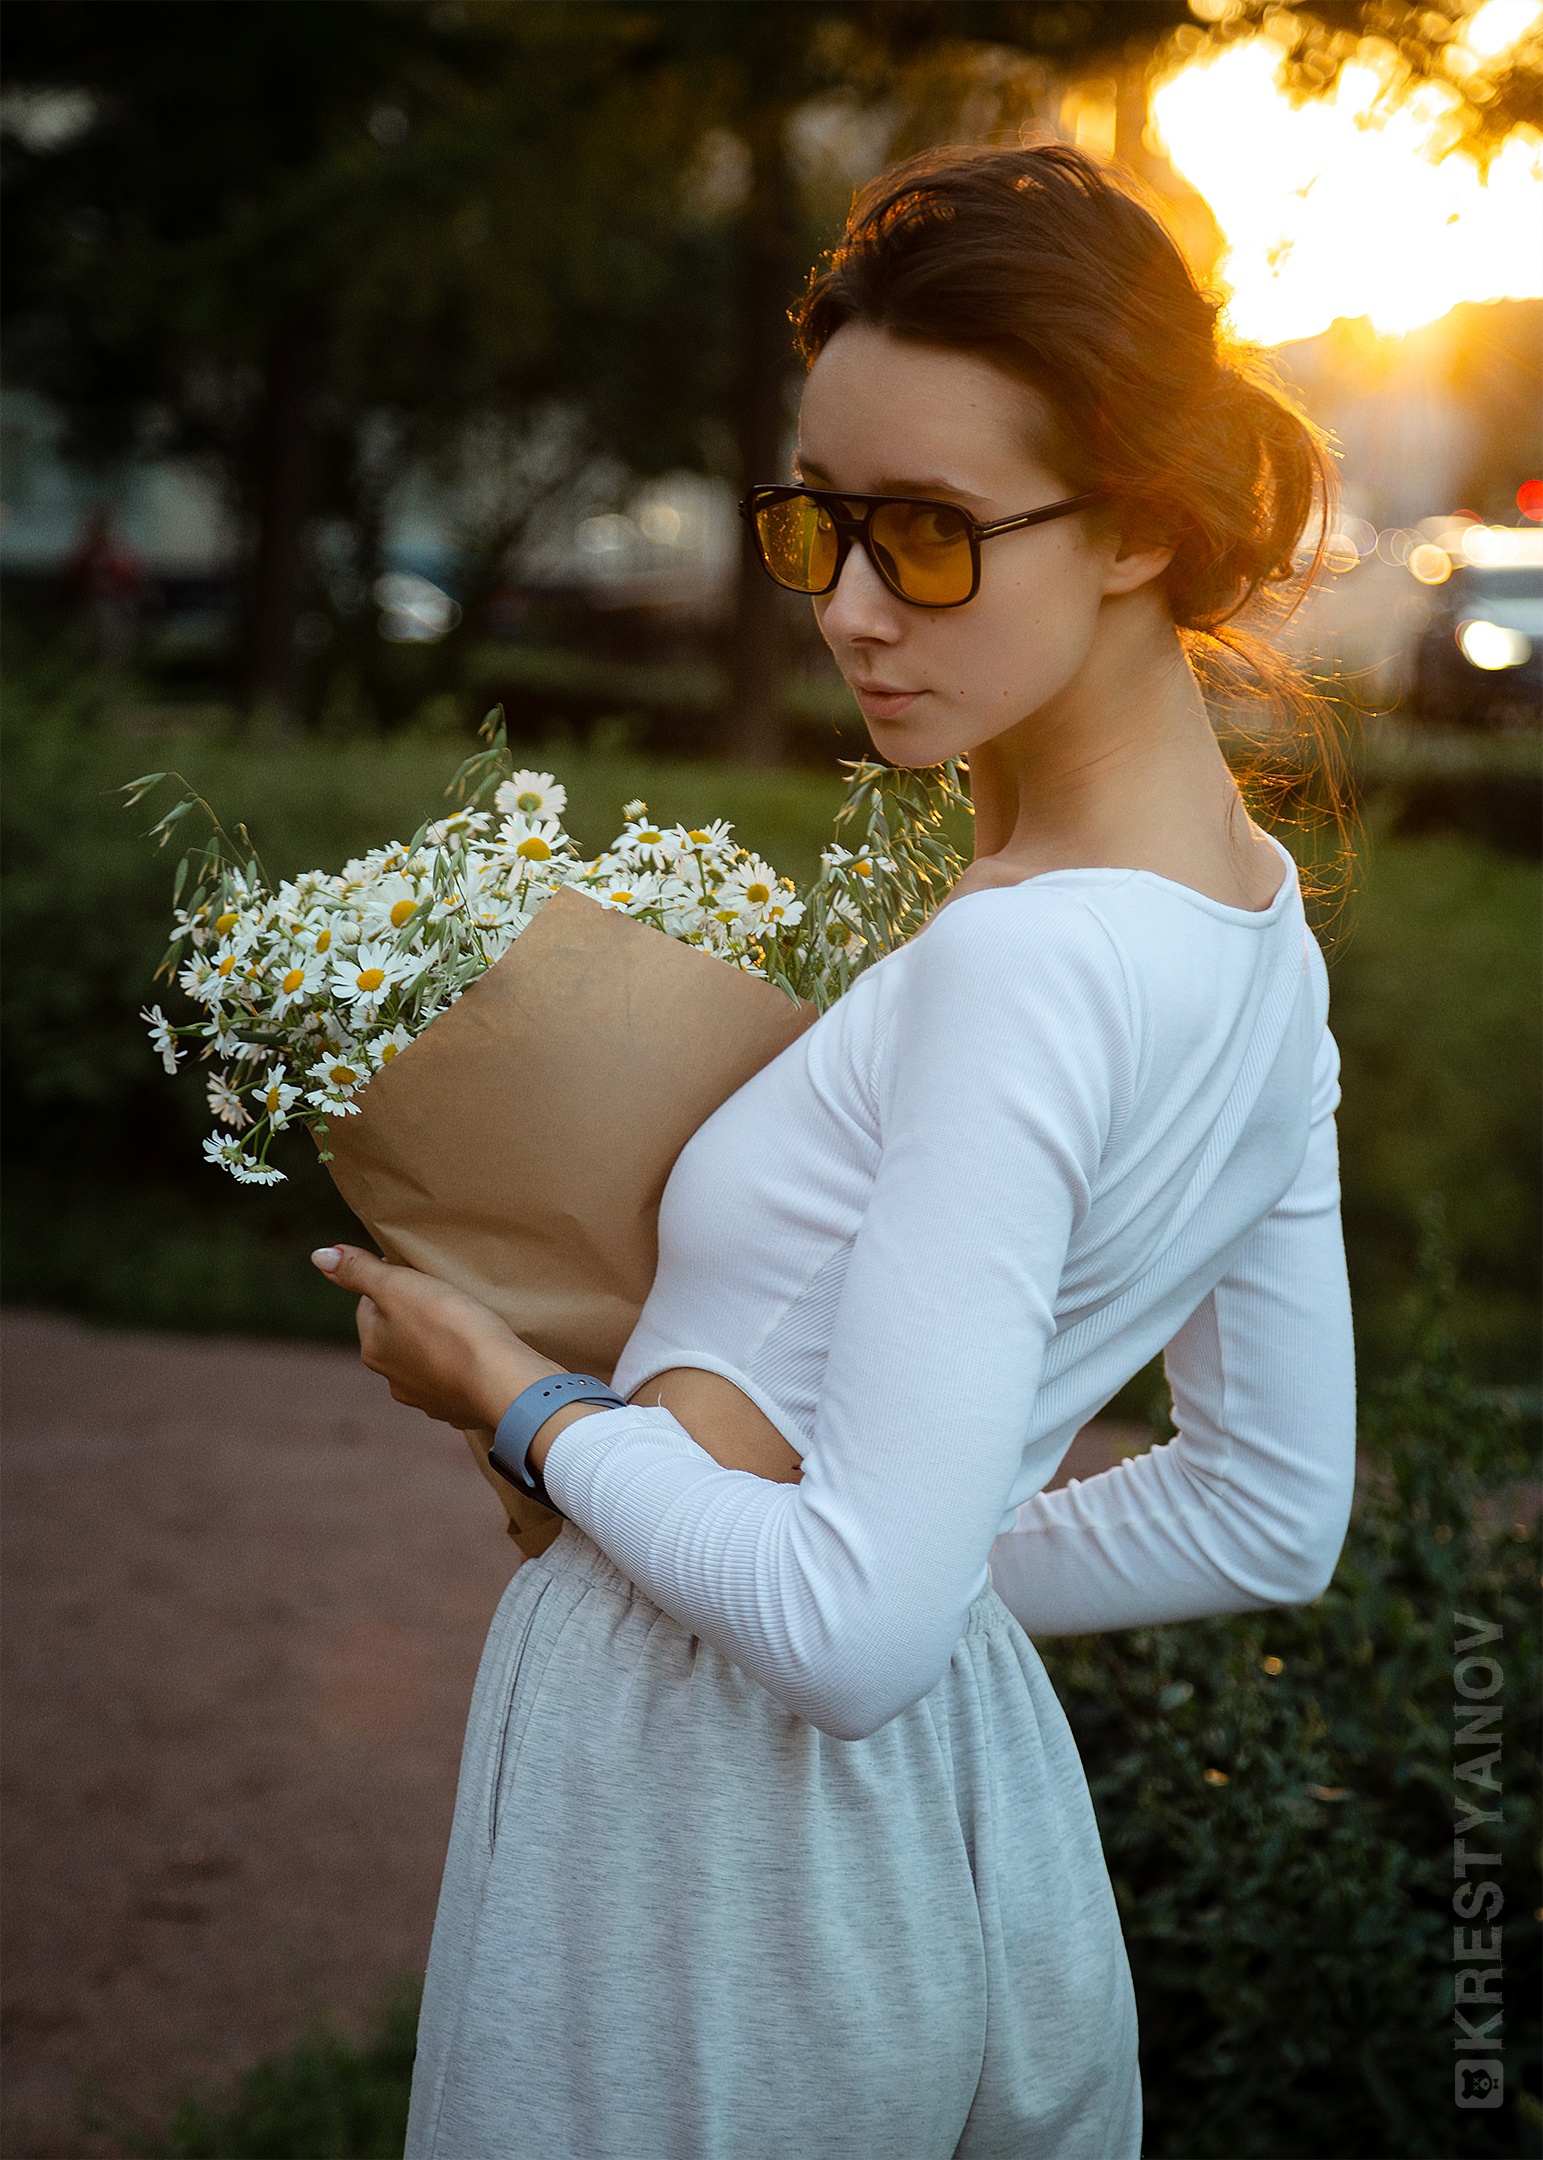 Evgeniy Krestyanov Women White Clothing Bouquet Looking At Viewer 1543x2160